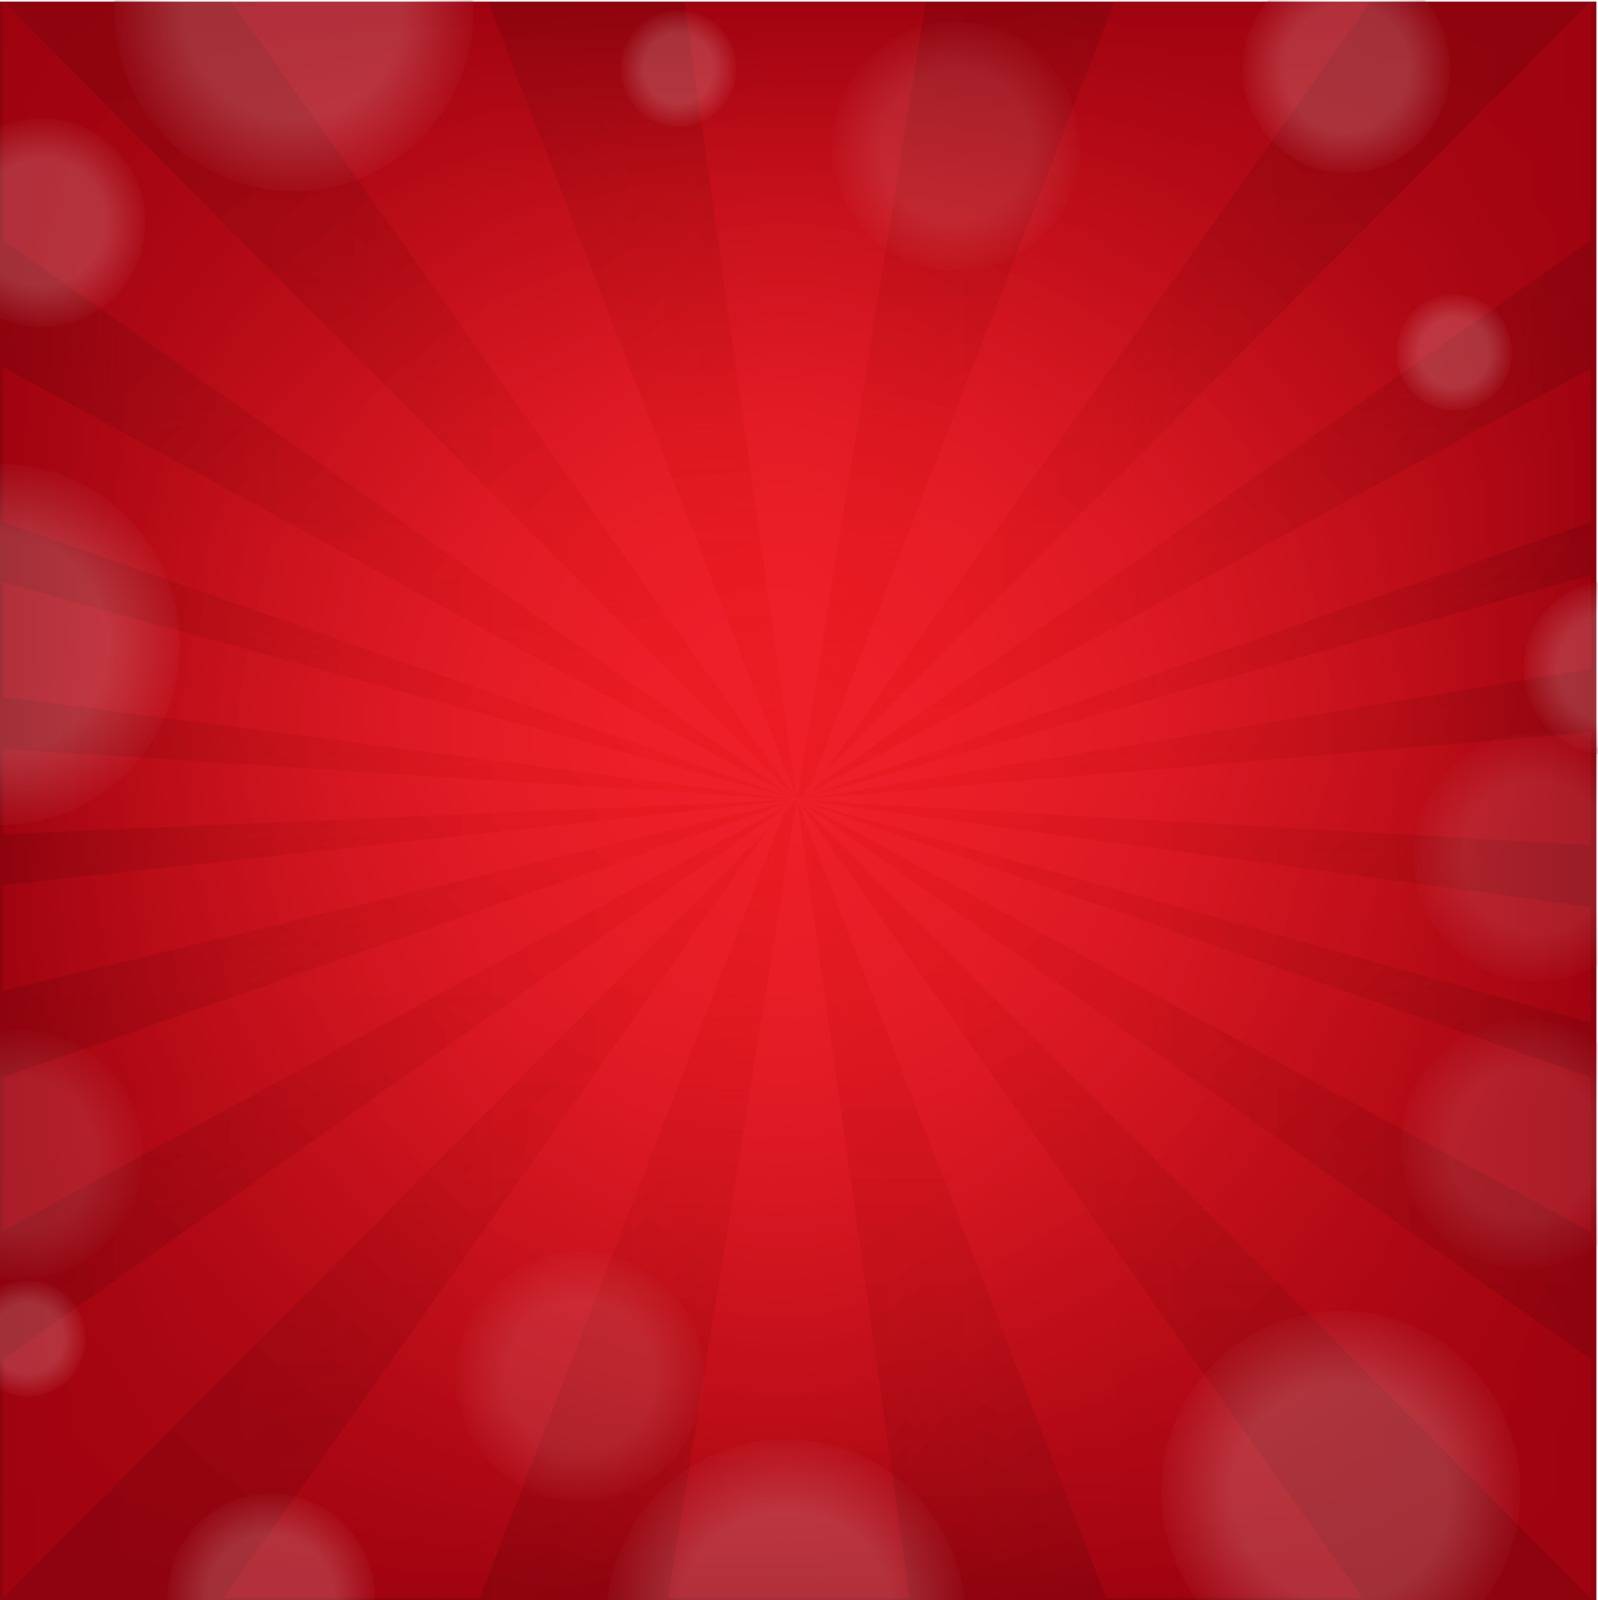 Red Sunburst, With Gradient Mesh, Vector Illustration